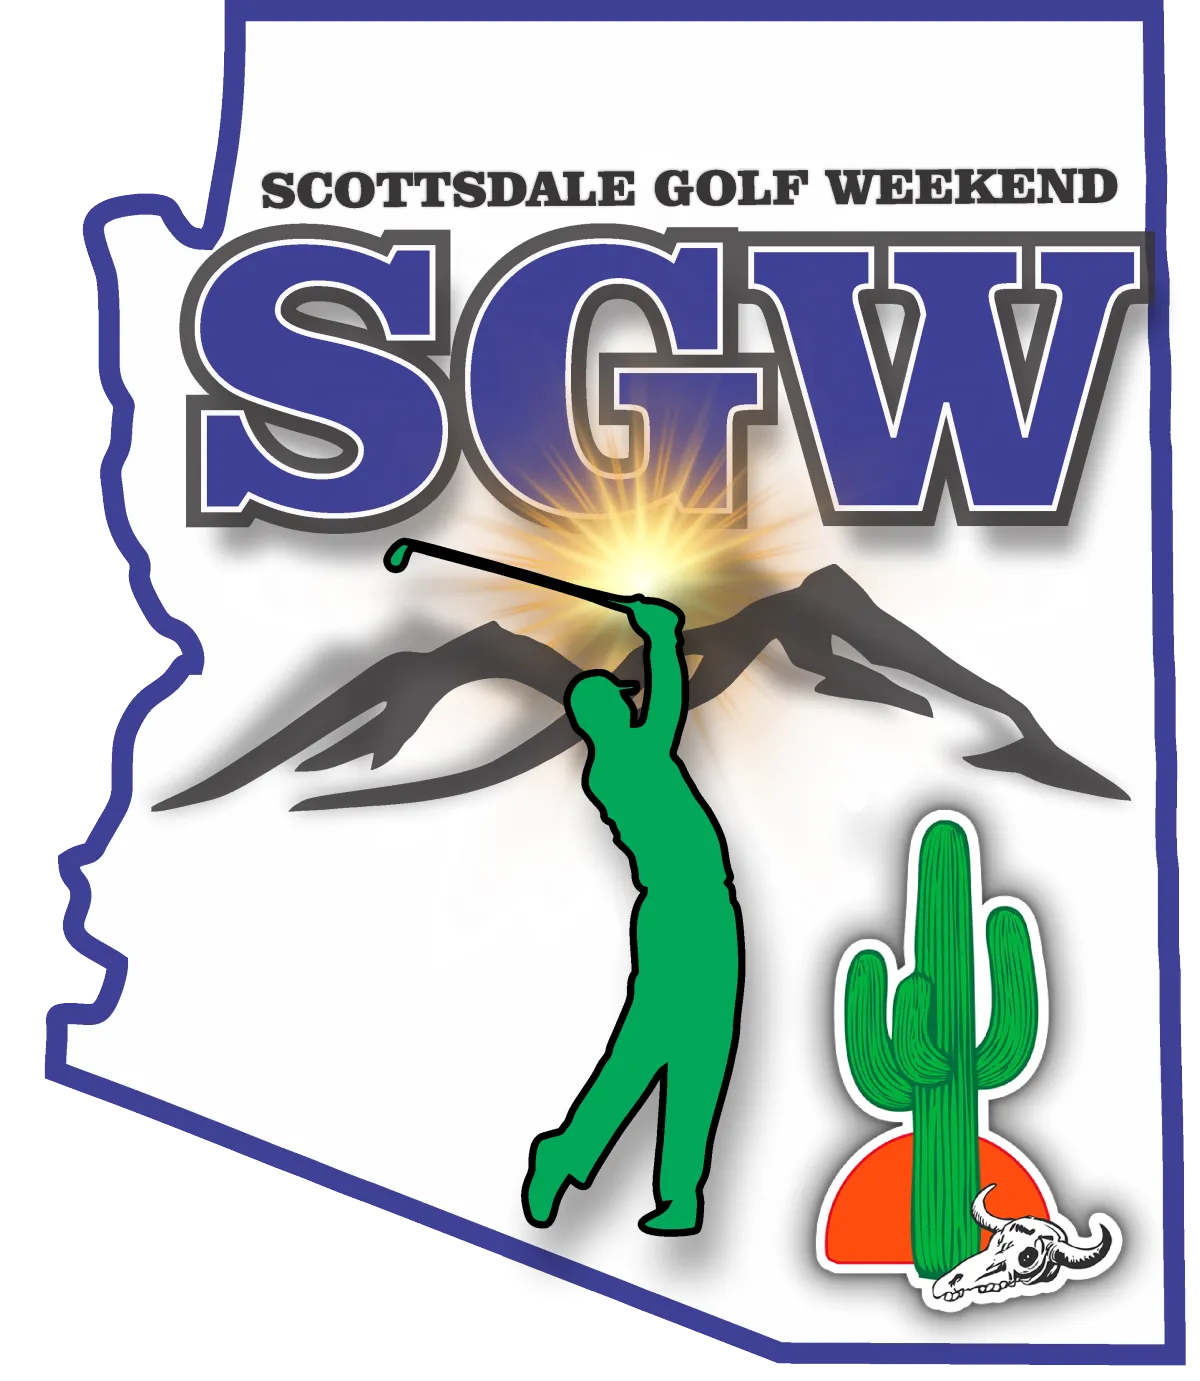 Scottsdale Golf Weekend plans the ultimate golf trip to Scottsdale, AZ 